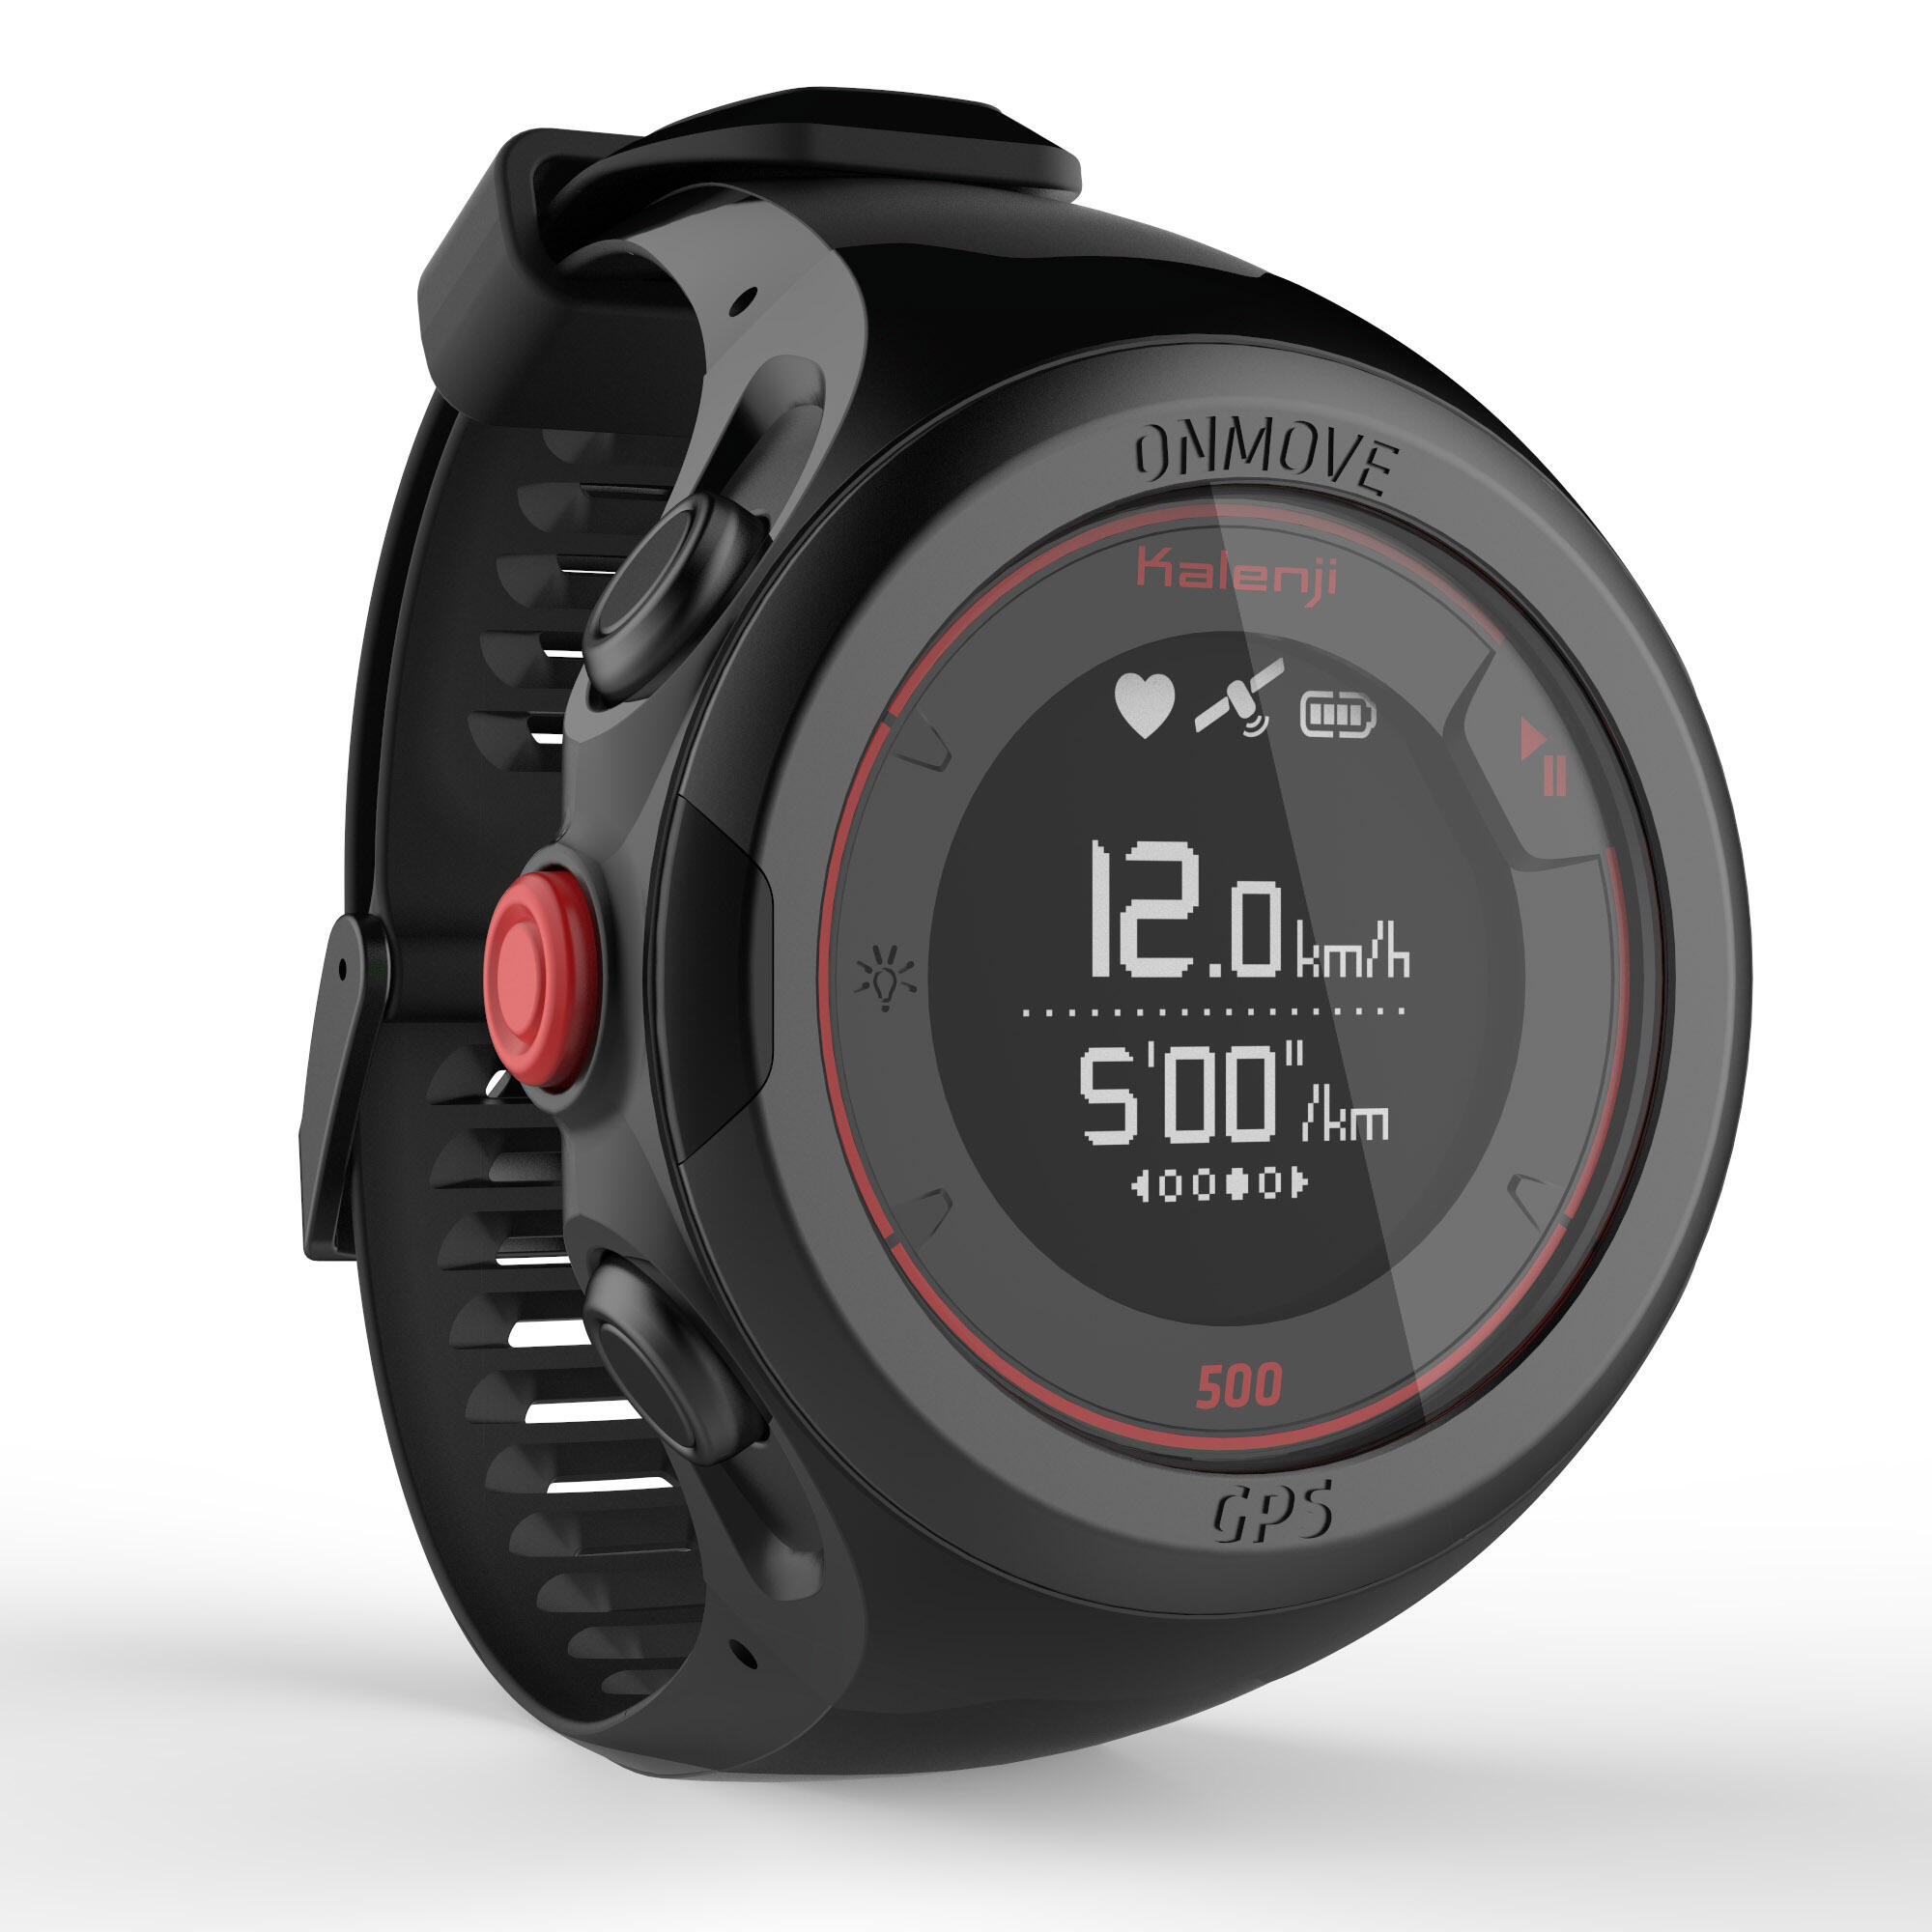 KIPRUN ONmove 500 GPS running watch and wrist heart rate monitor - black